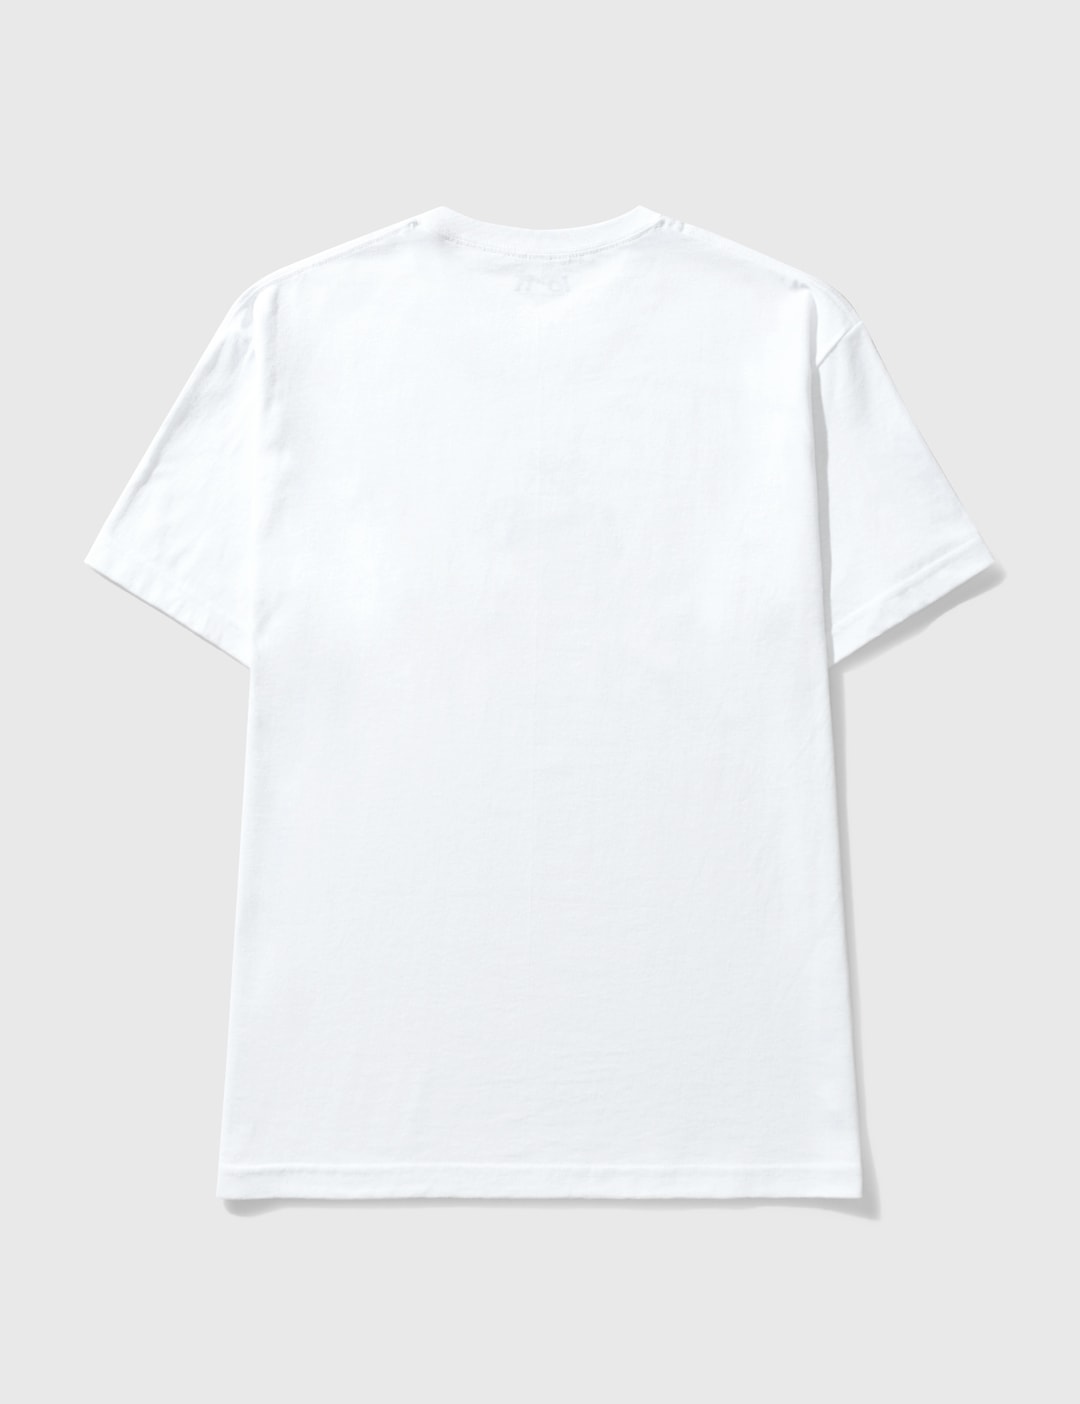 Lo-Fi - Wish Logo T-shirt | HBX - Globally Curated Fashion and ...